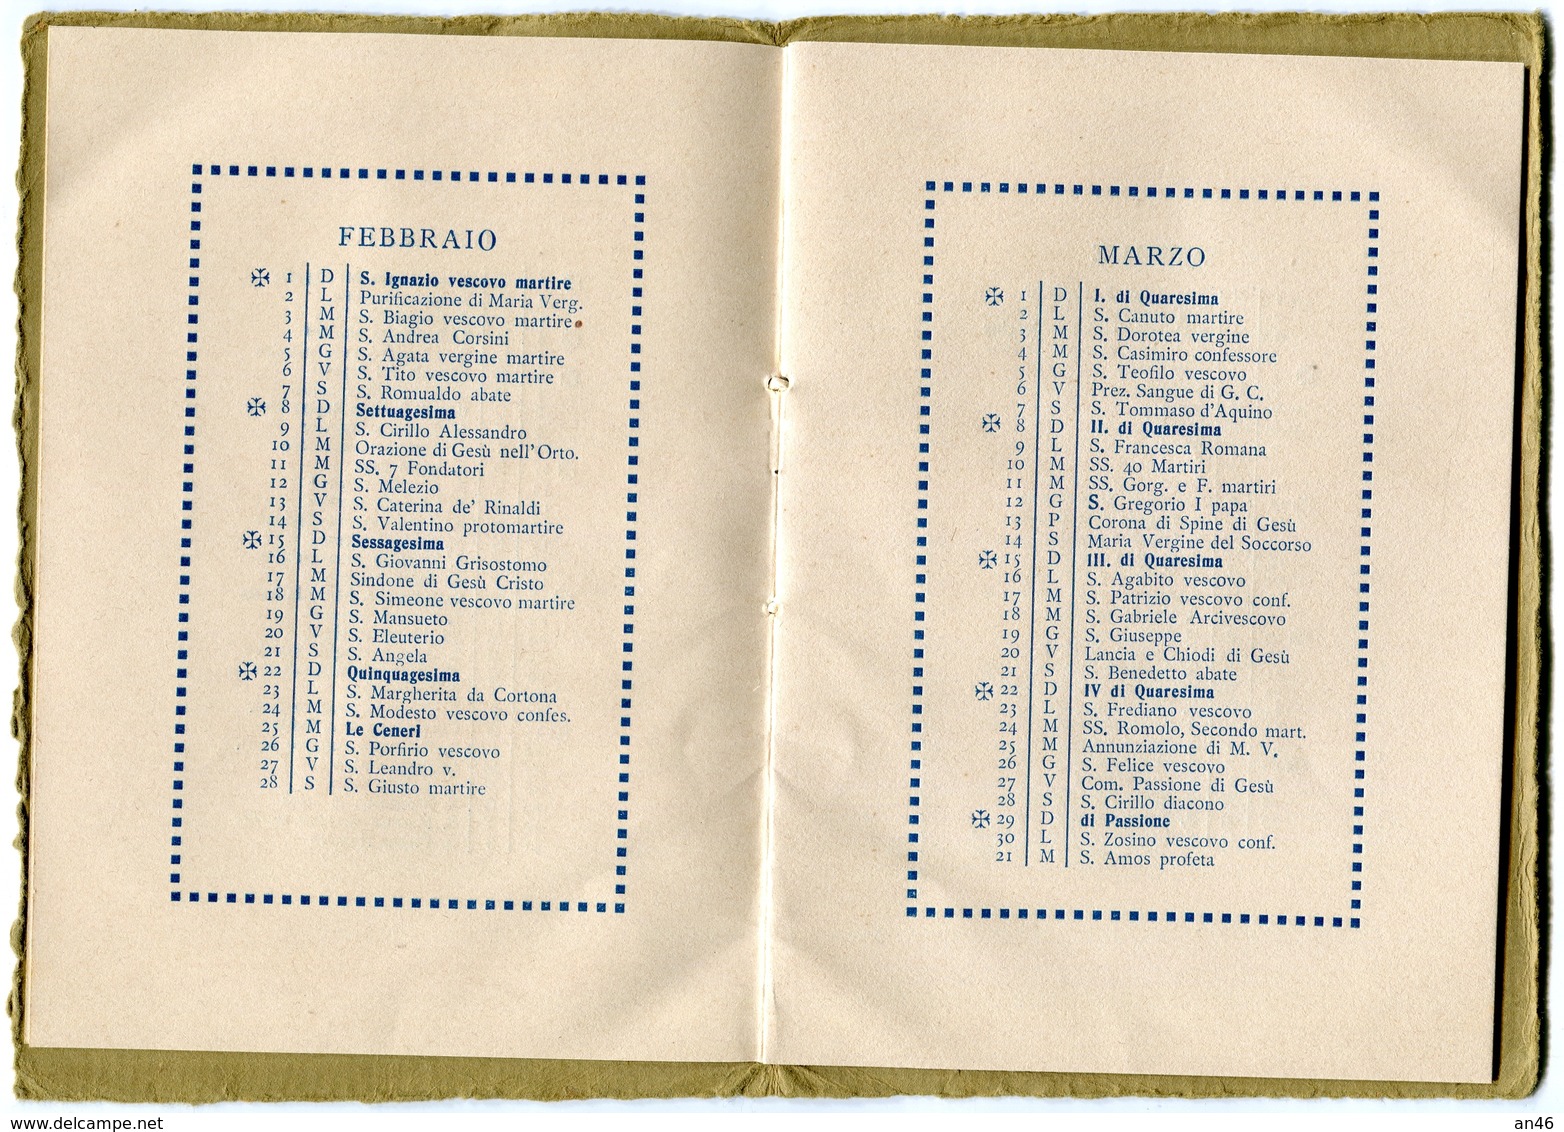 Calendario-Calendarietto-Calendrier-Kalender-Calendar-"Regia Accademia Navale 1914" Integra E Originale 100% - Groot Formaat: 1901-20